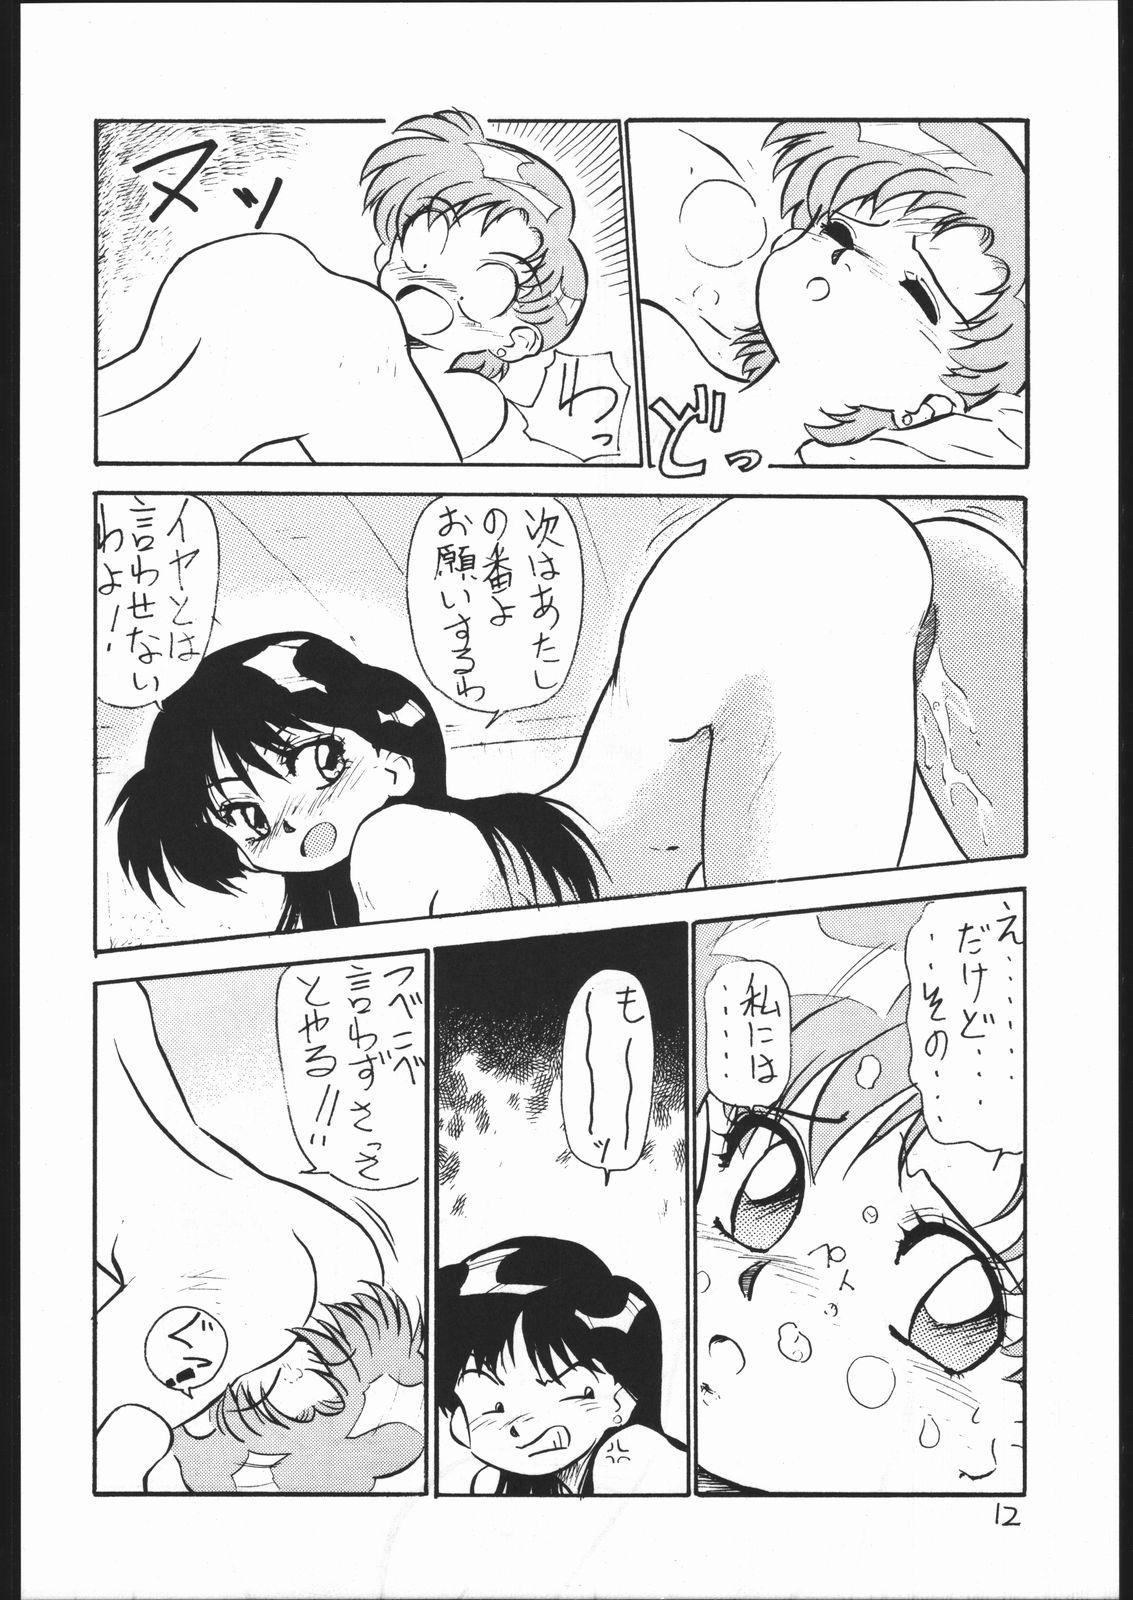 8teenxxx V・H・S・M Vol. 1 - Sailor moon Naked Women Fucking - Page 11